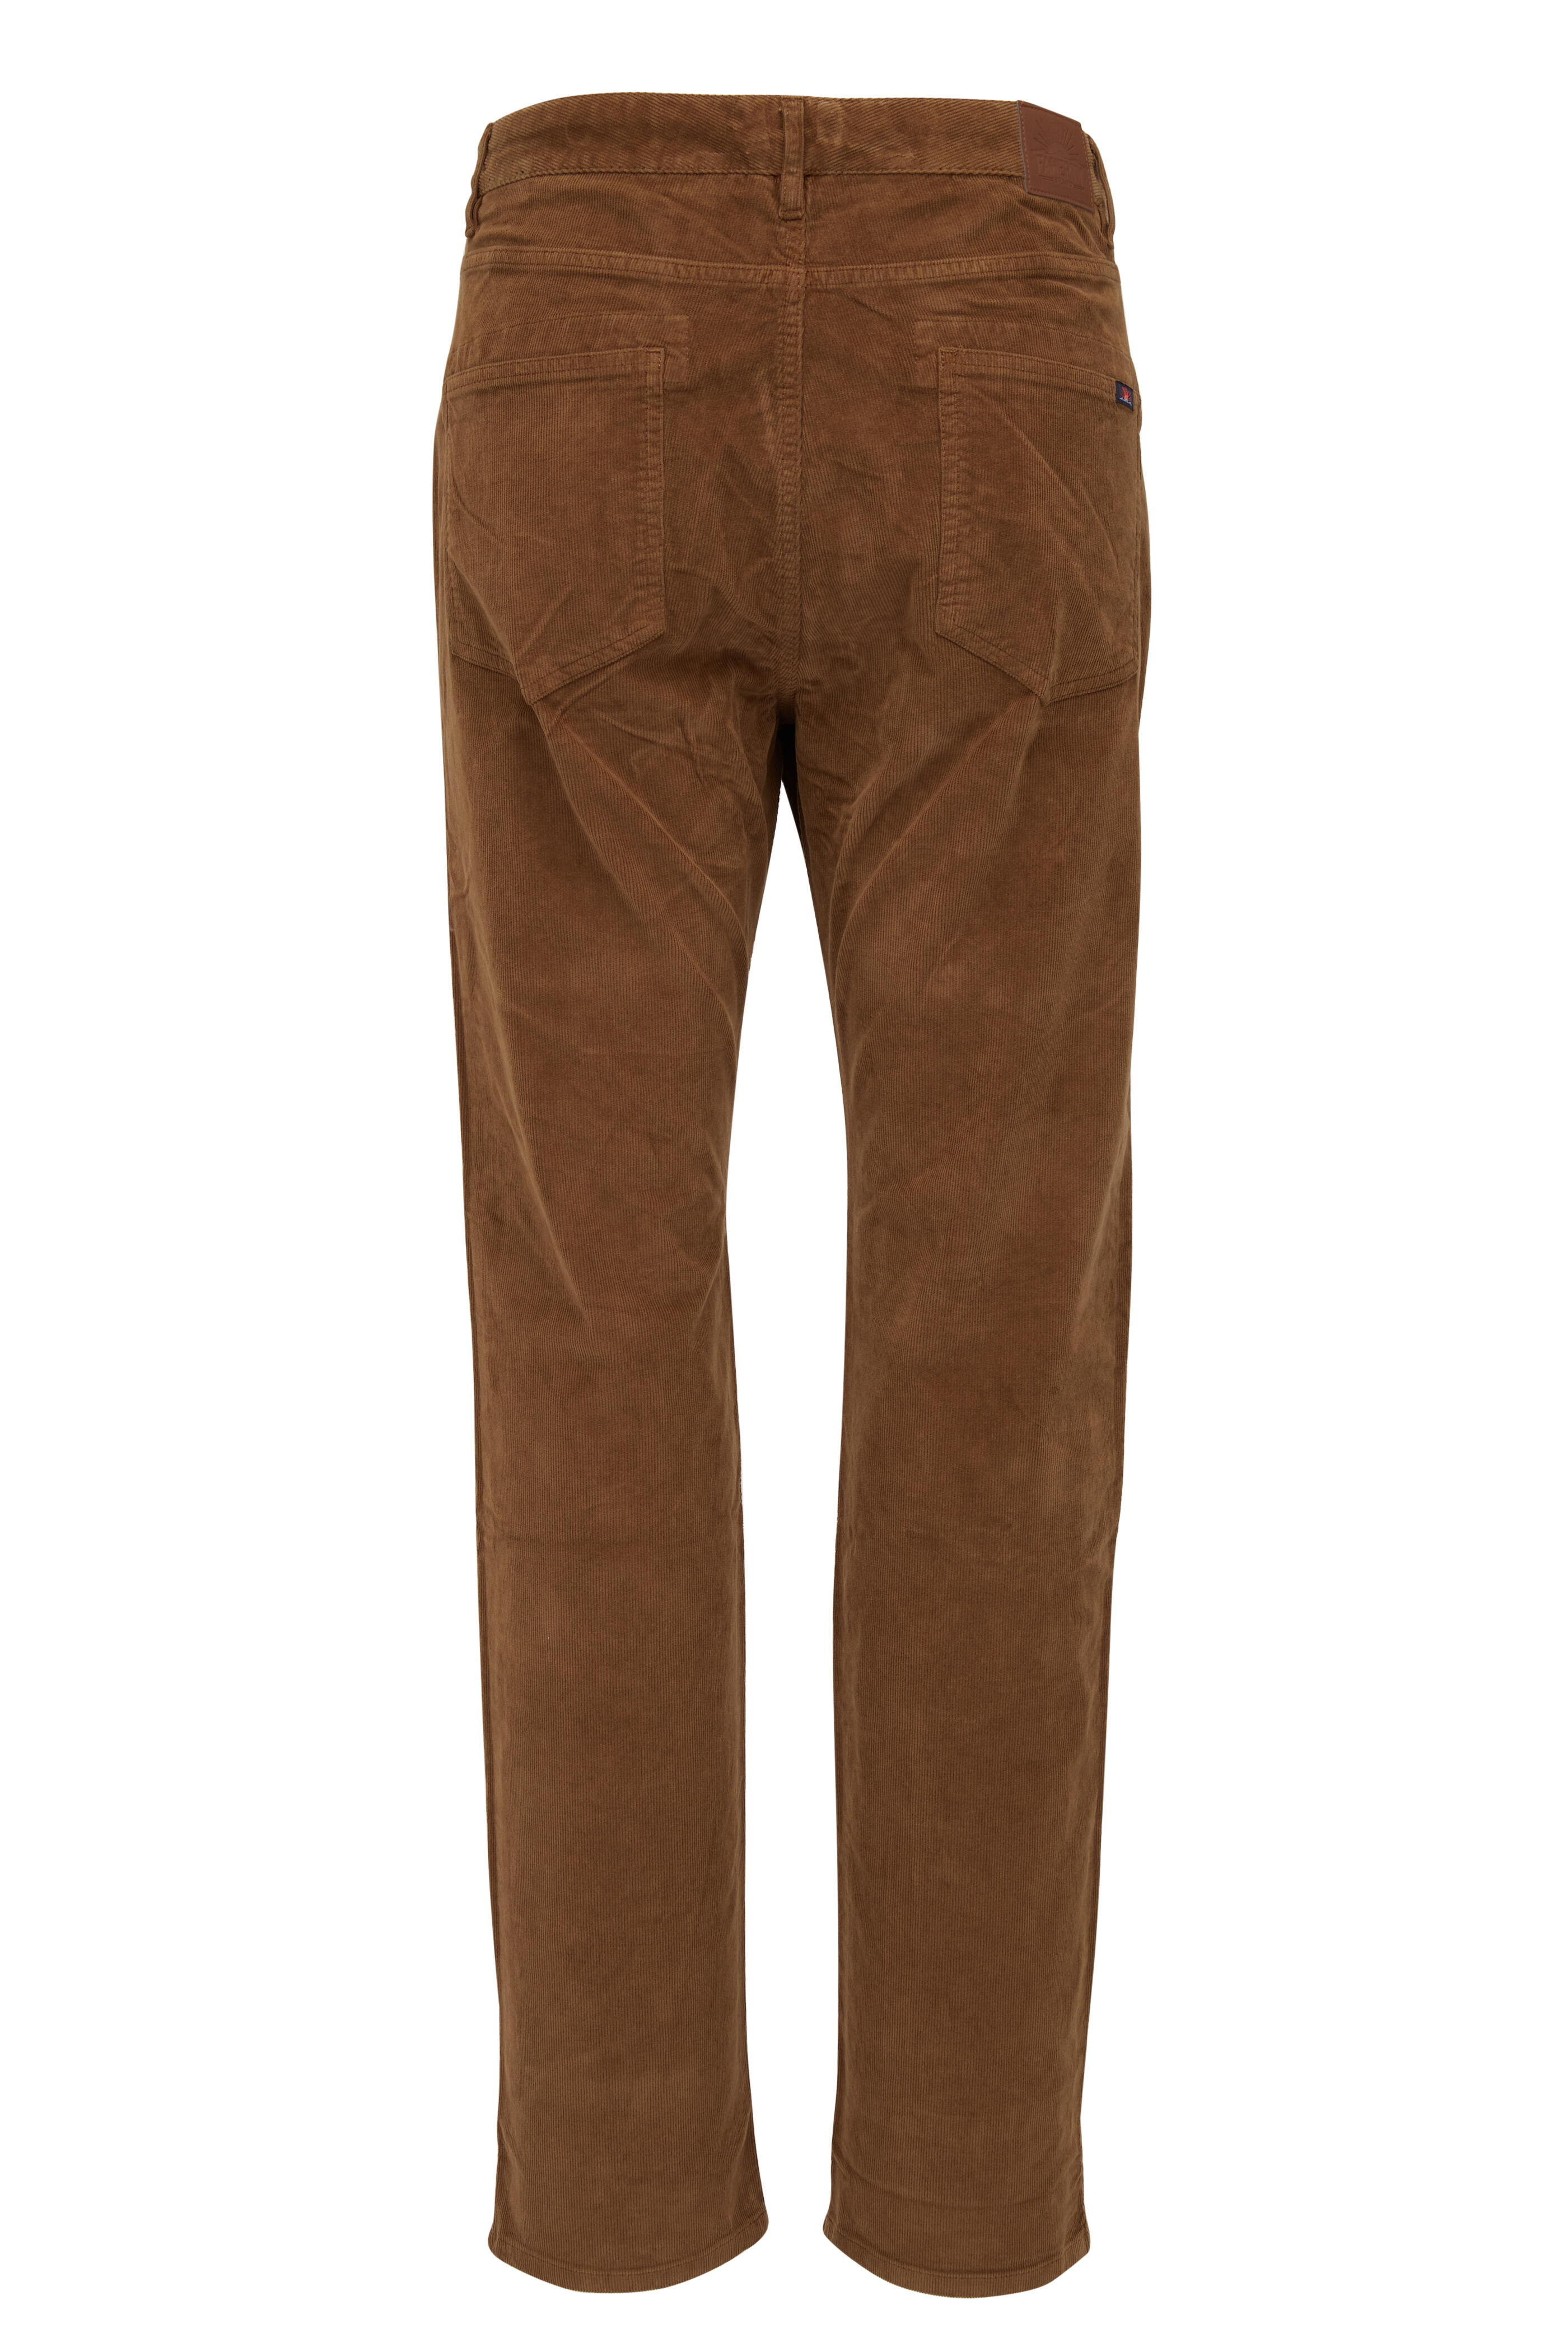 Faherty Brand - Mountain Brown Stretch Corduroy Pant